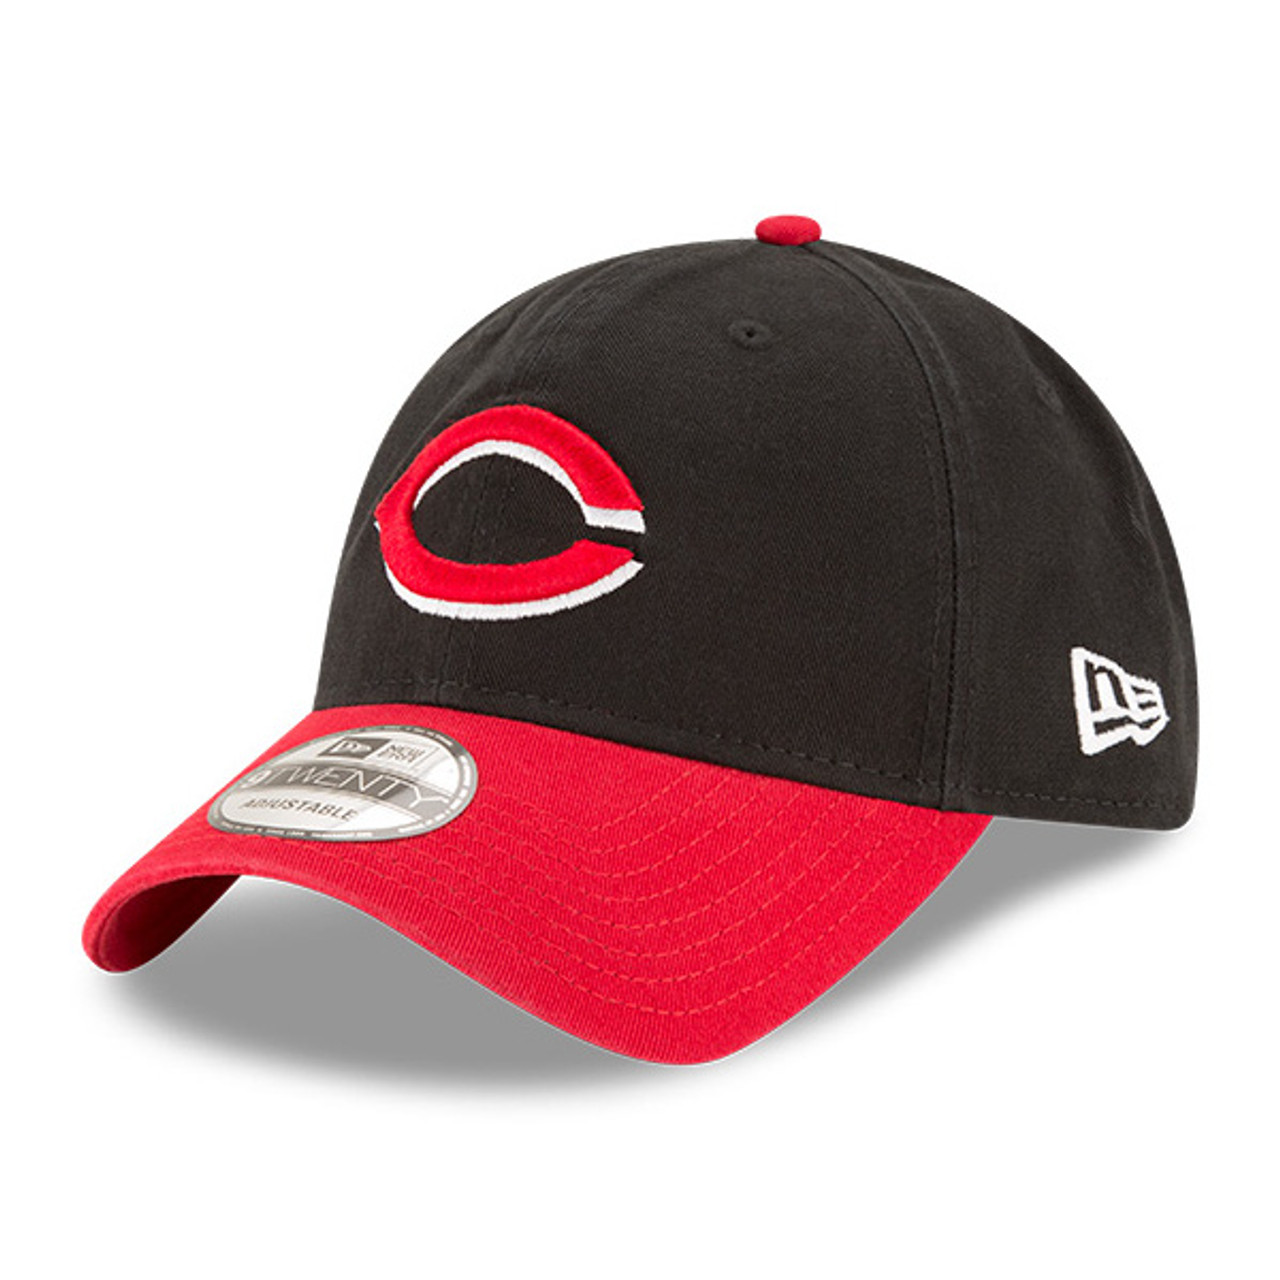 Toddler New Era Red St. Louis Cardinals Team 9TWENTY Adjustable Hat